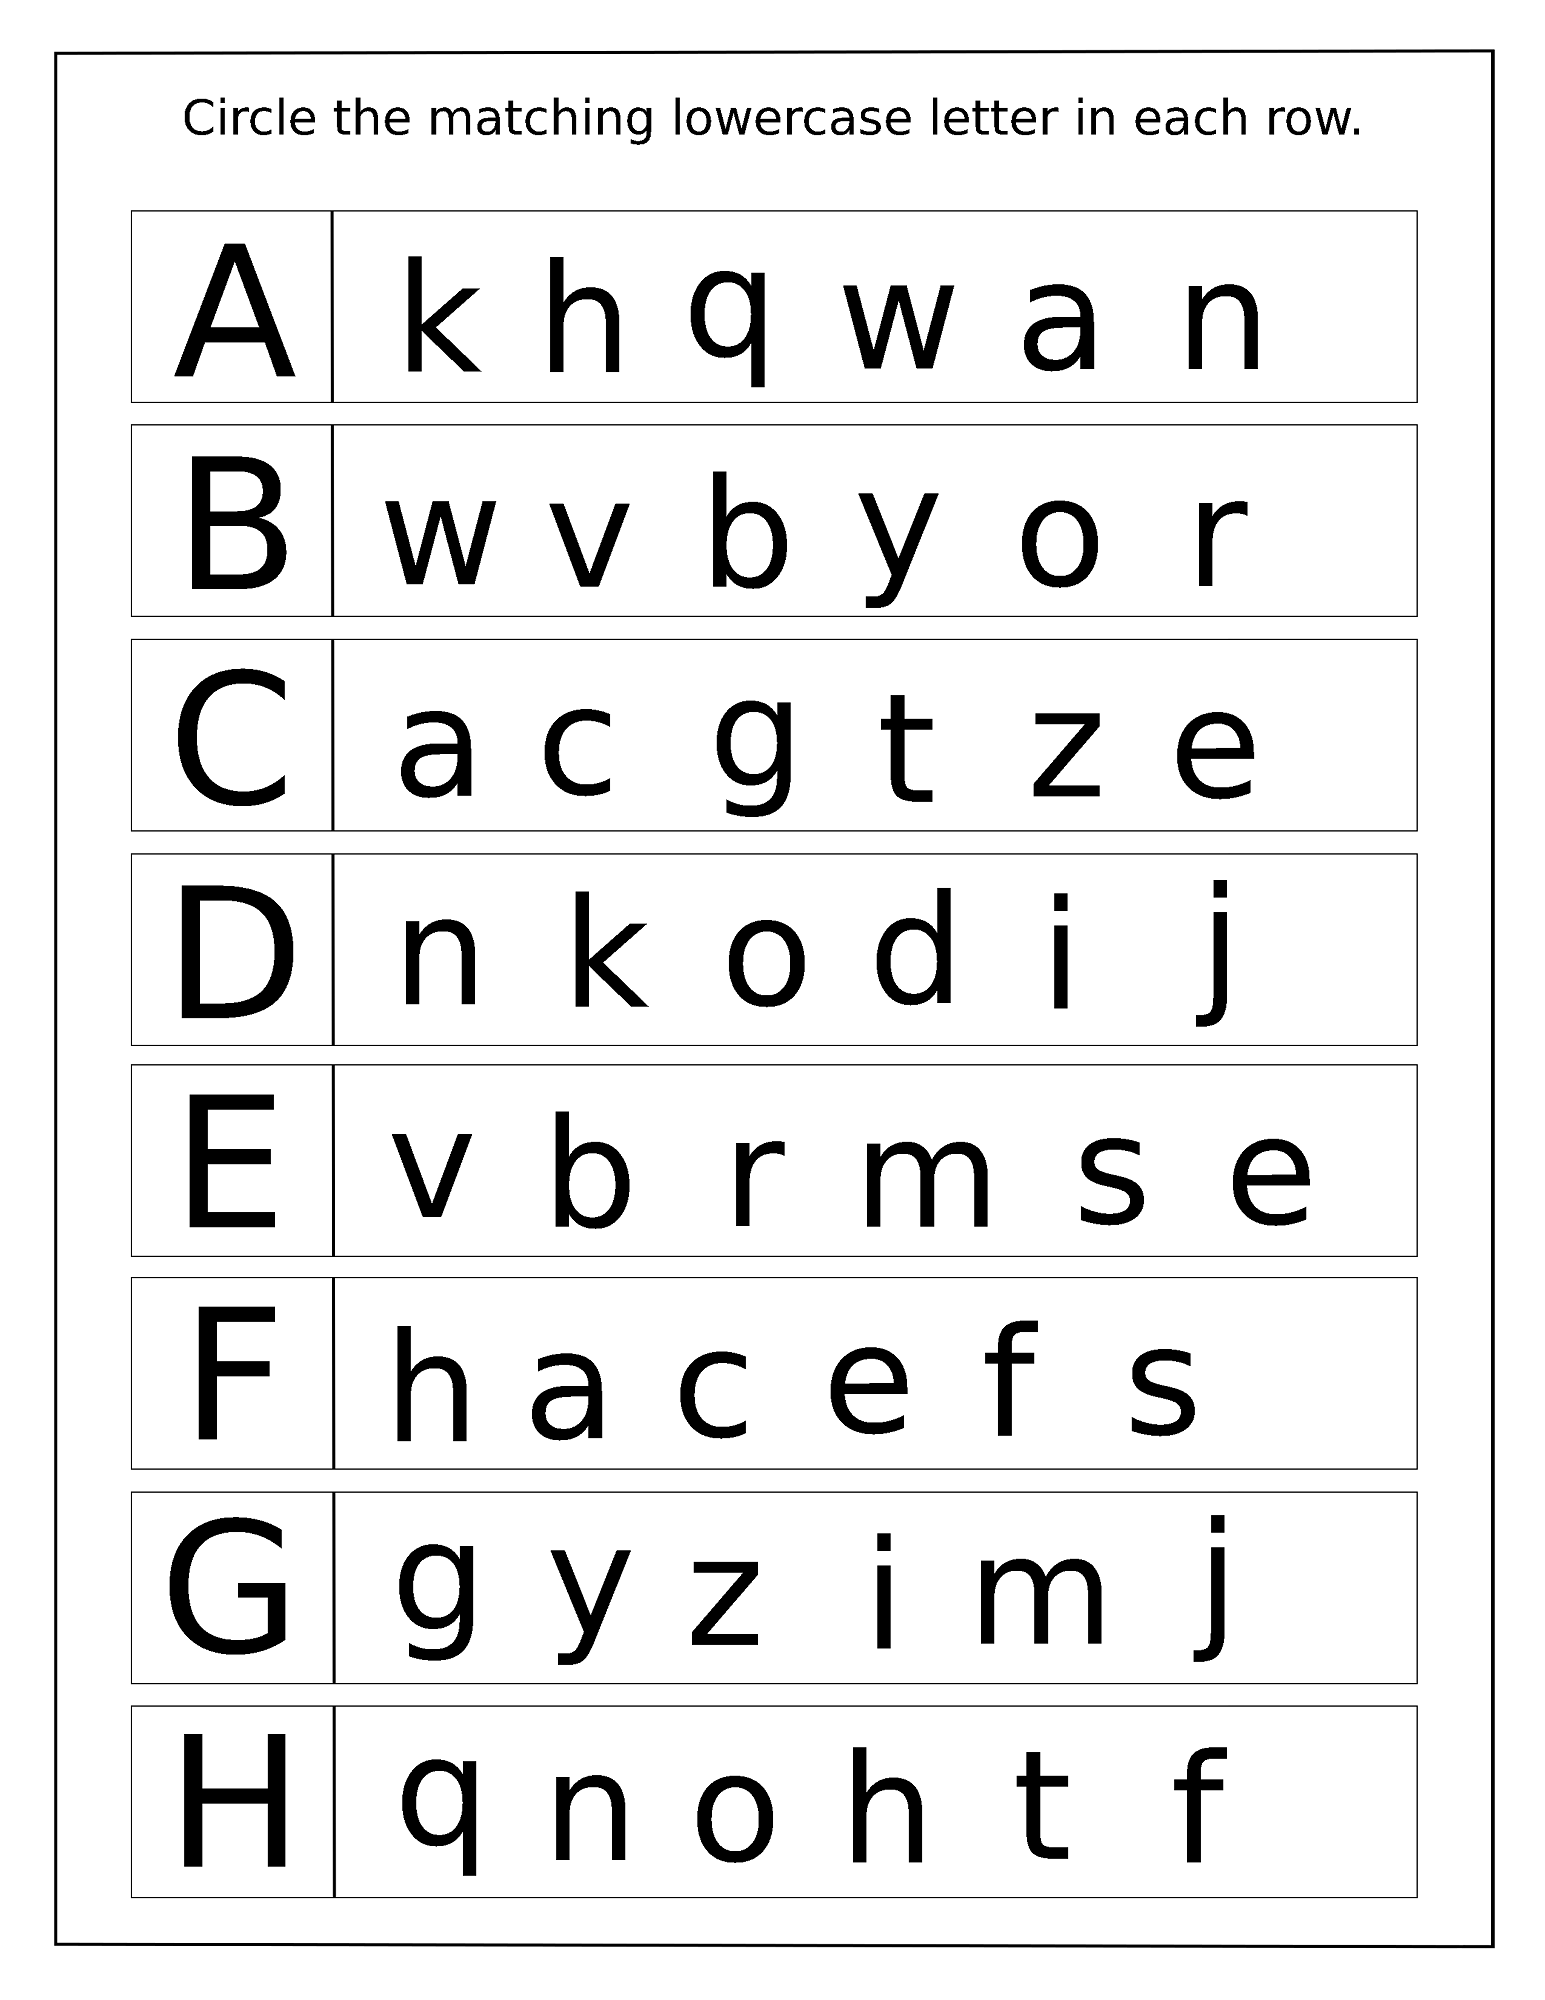 alphabet-matching-printable-printable-word-searches